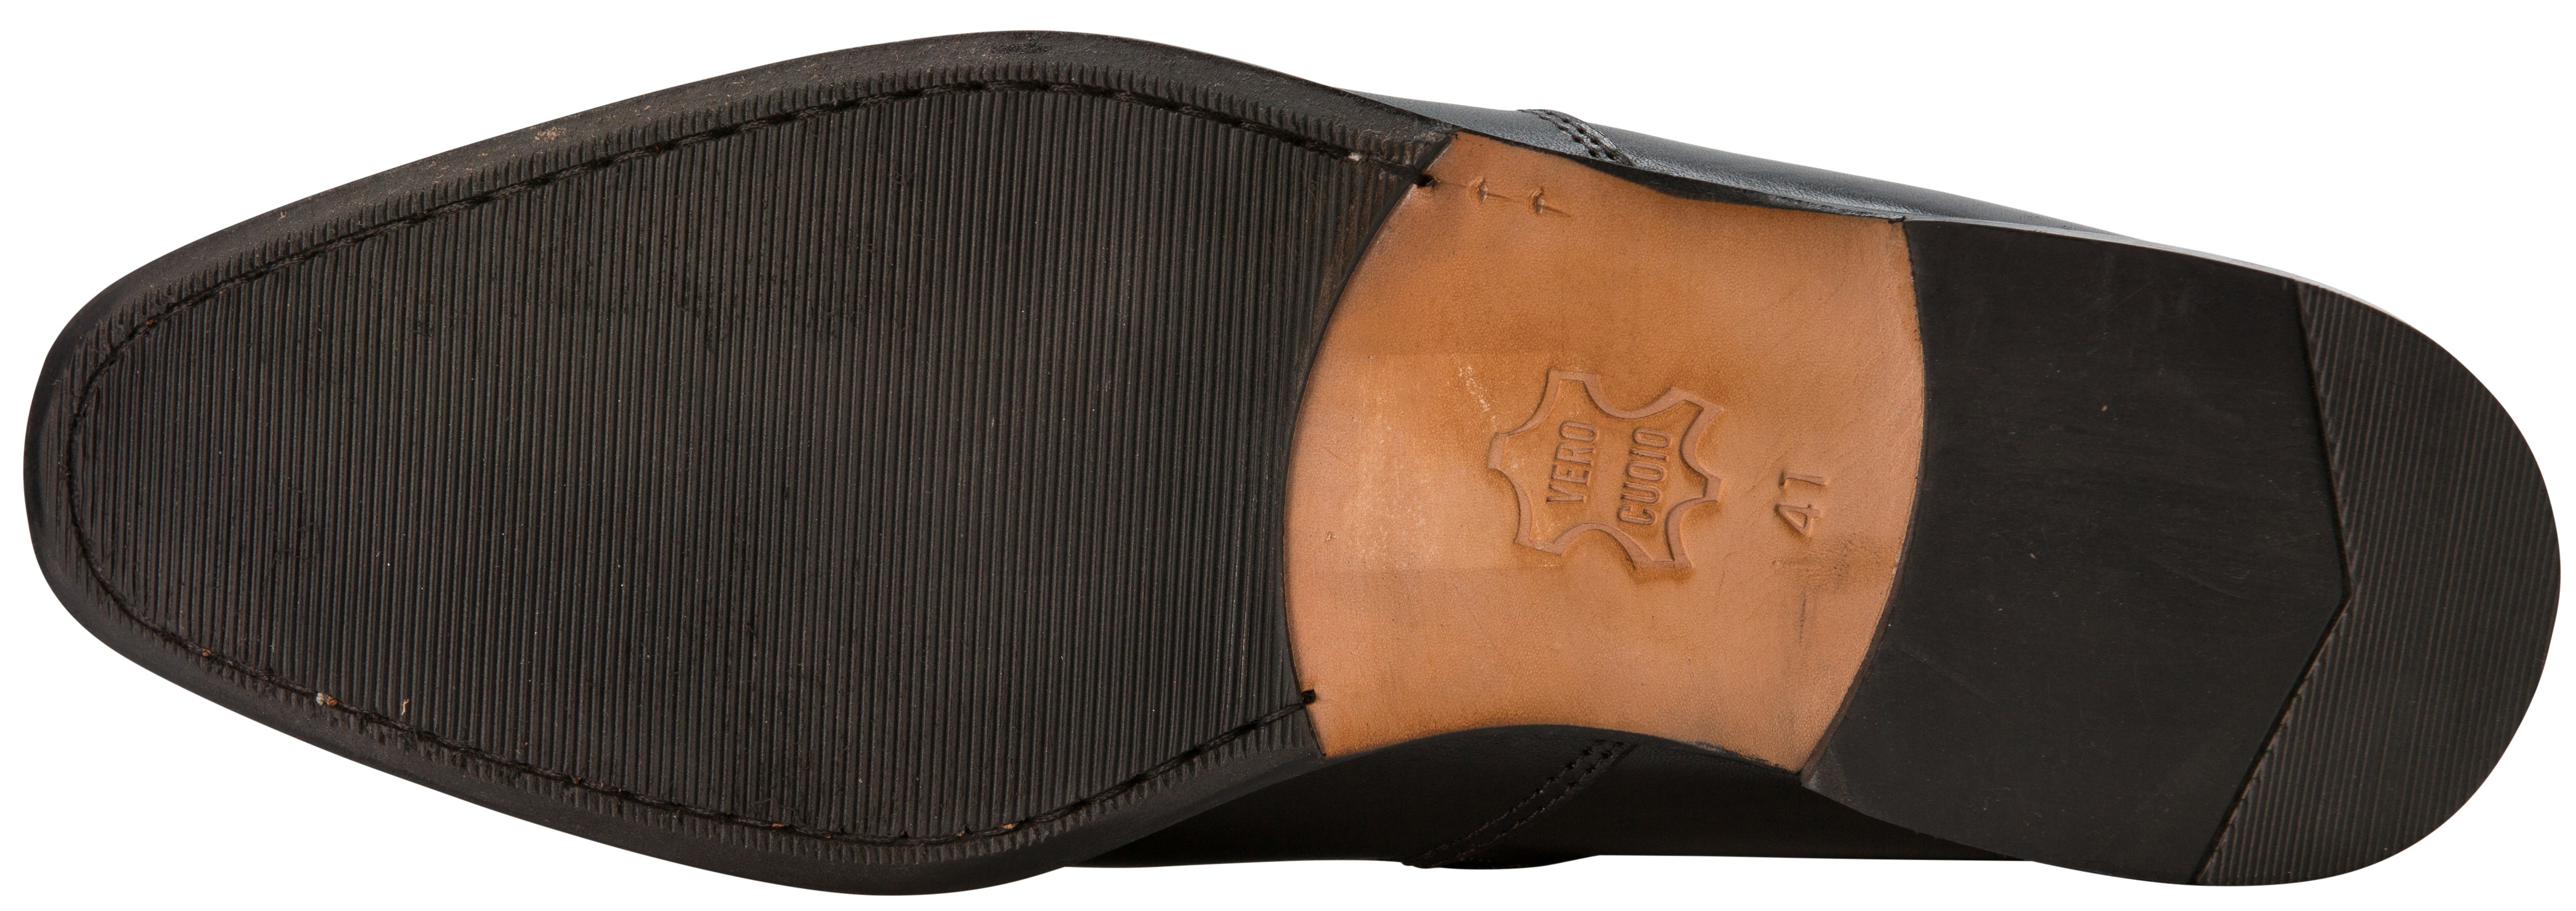 Luciana's Black Leather Side Profile Zipper Boot 4473